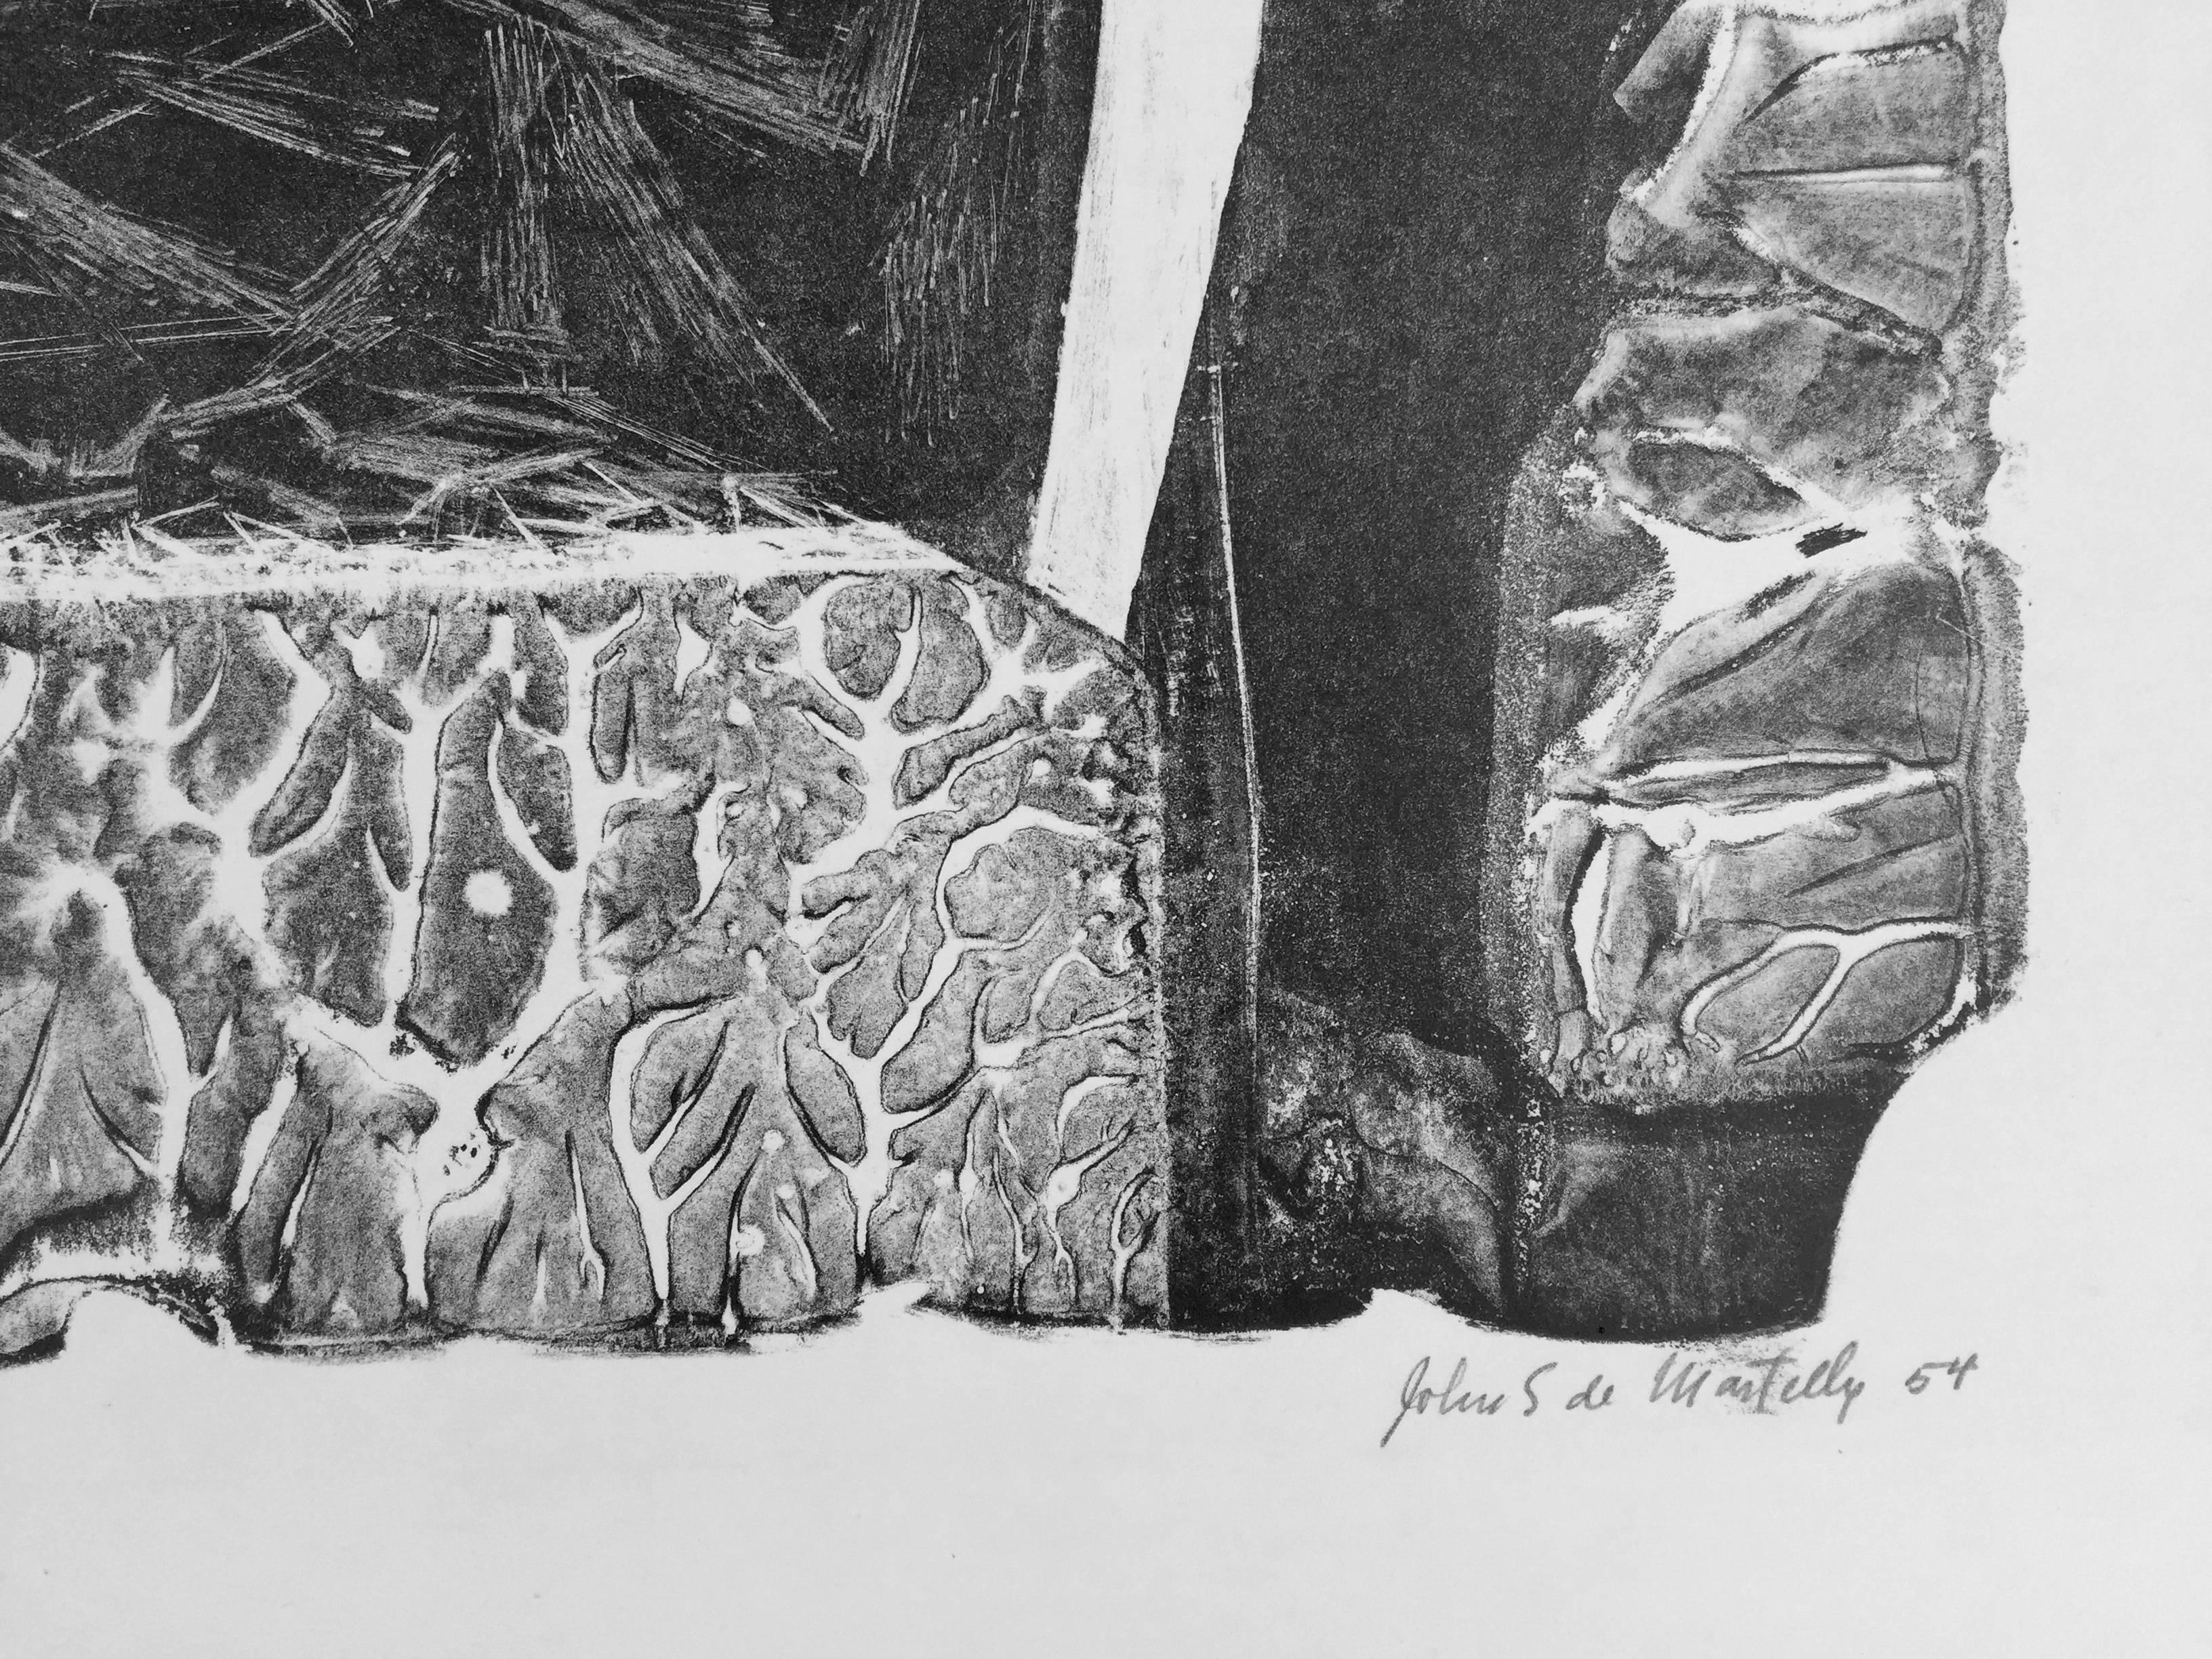 HIEROGLYPHIC (Abstrakt), Print, von John Stockton De Martelly